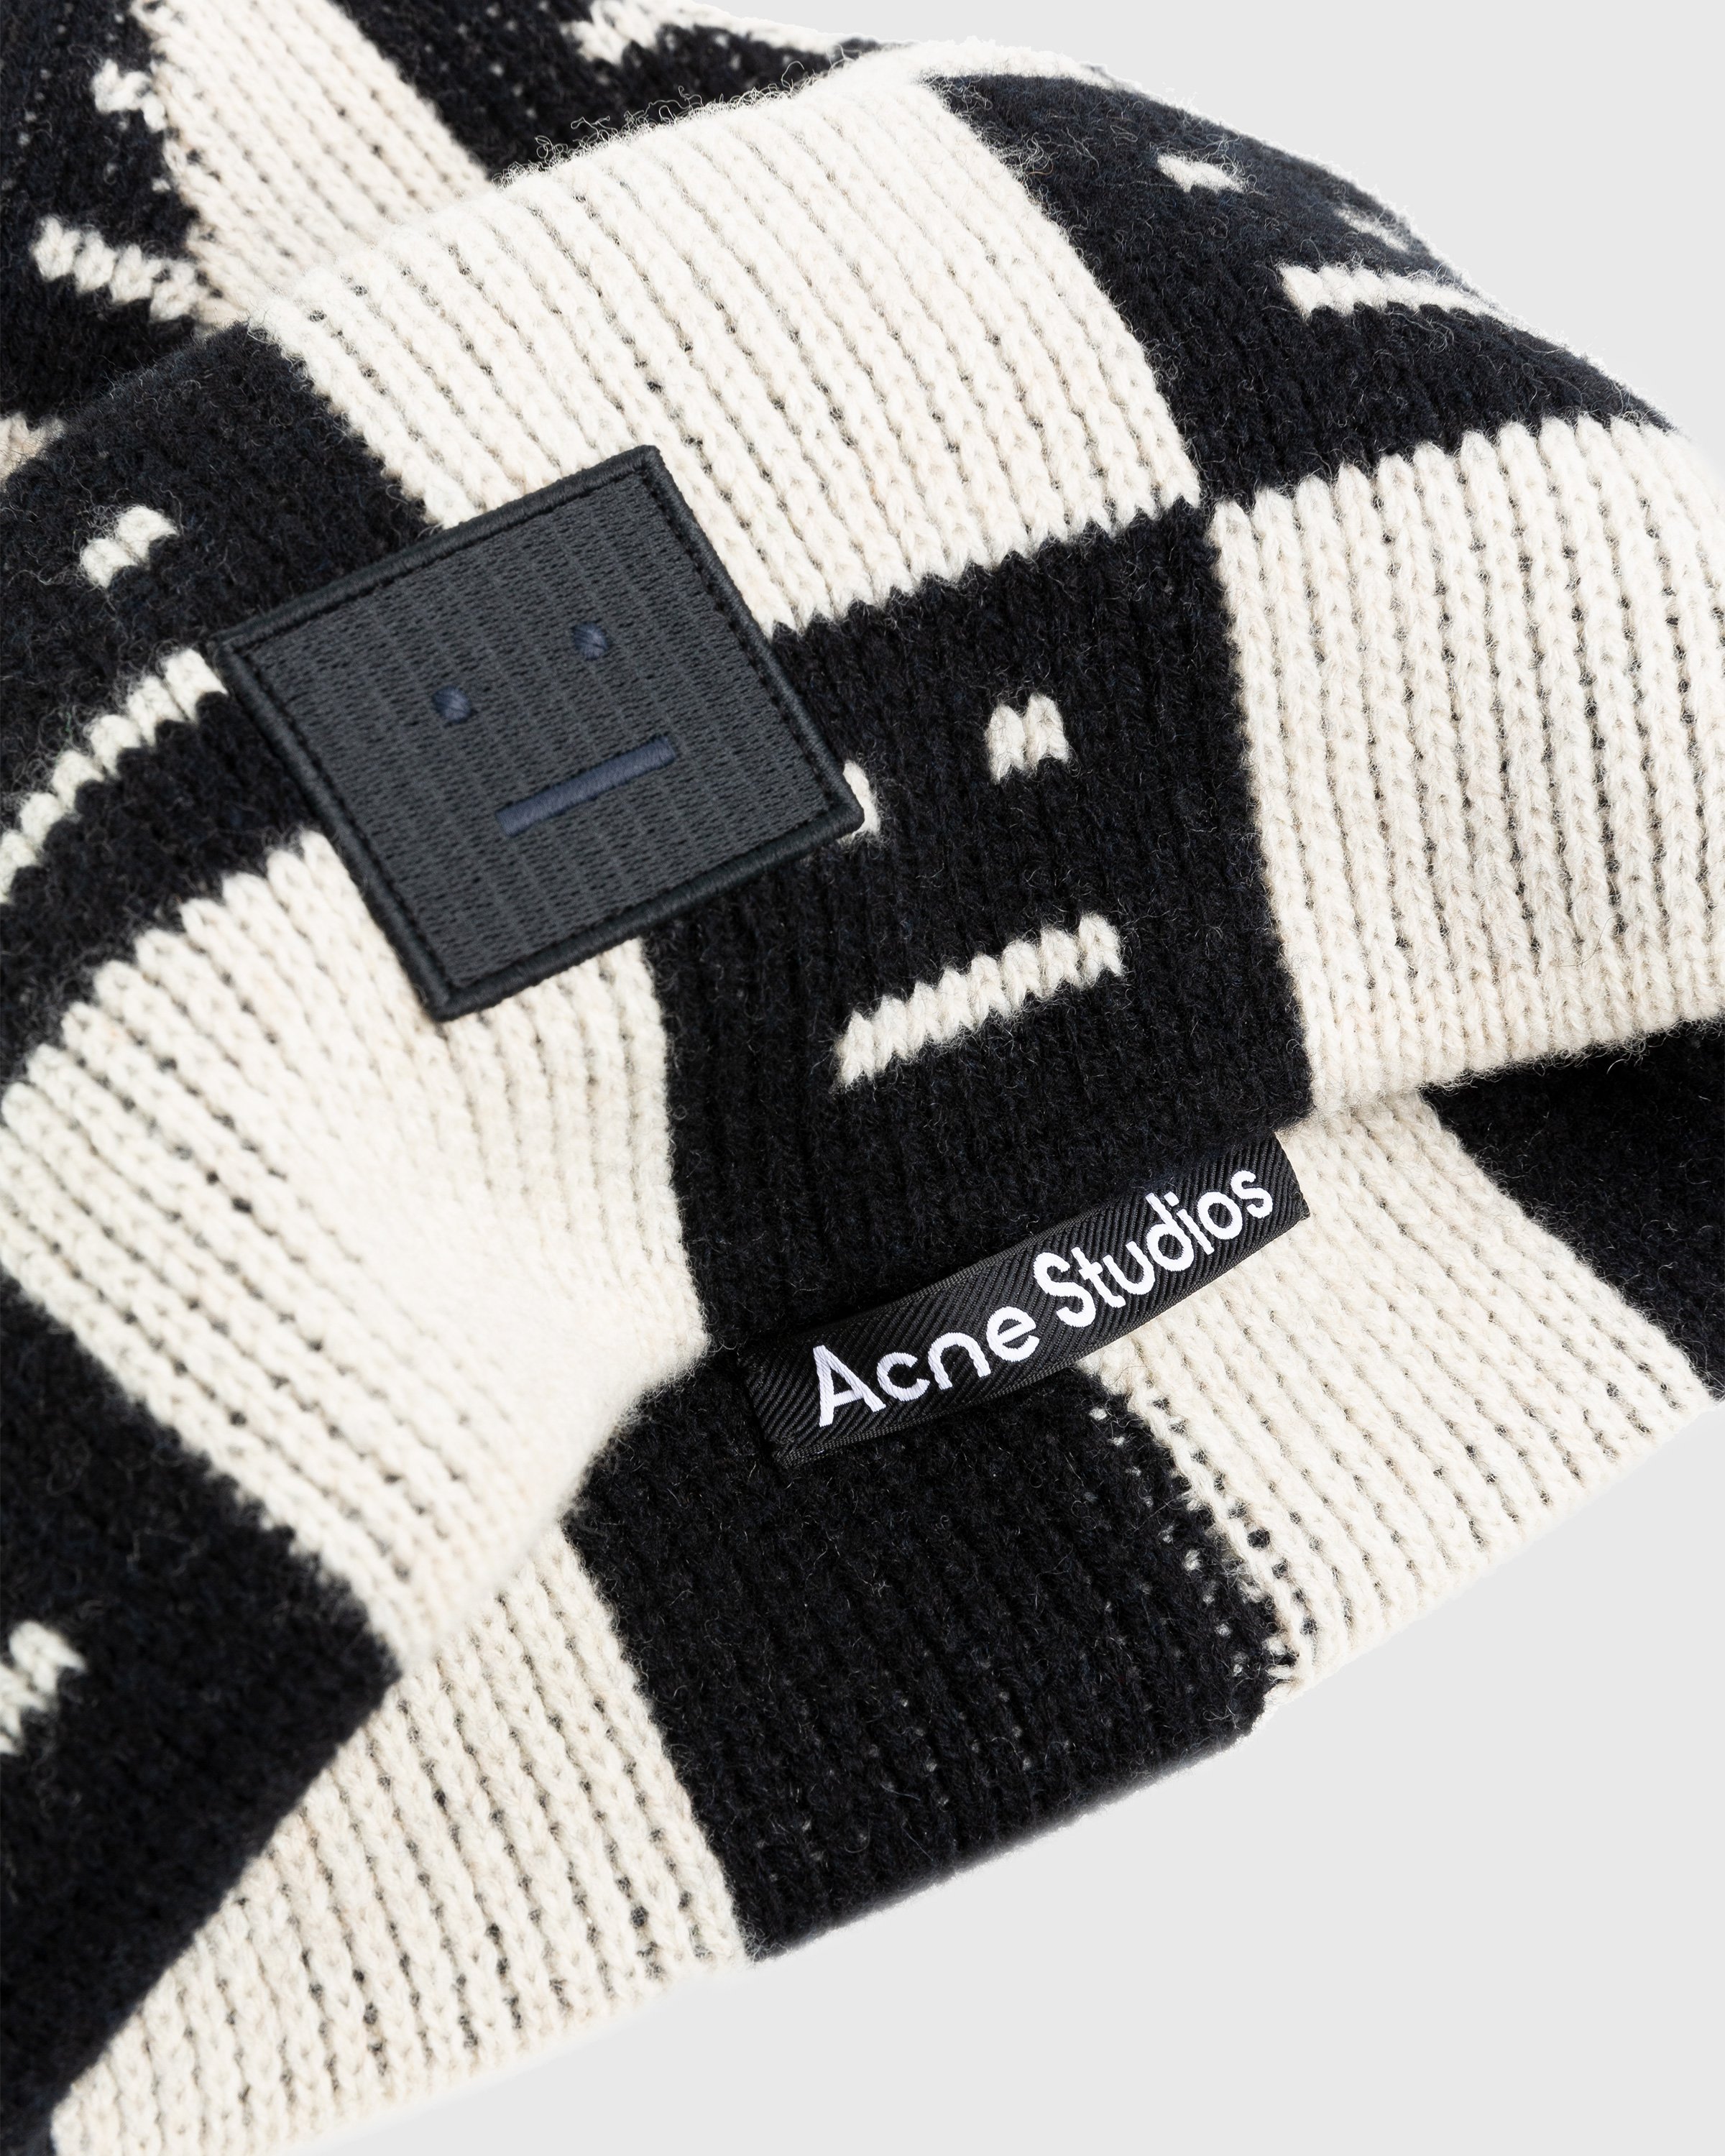 Acne Studios - Jacquard Knit Beanie Black/Oatmeal Melange - Accessories - Black - Image 3